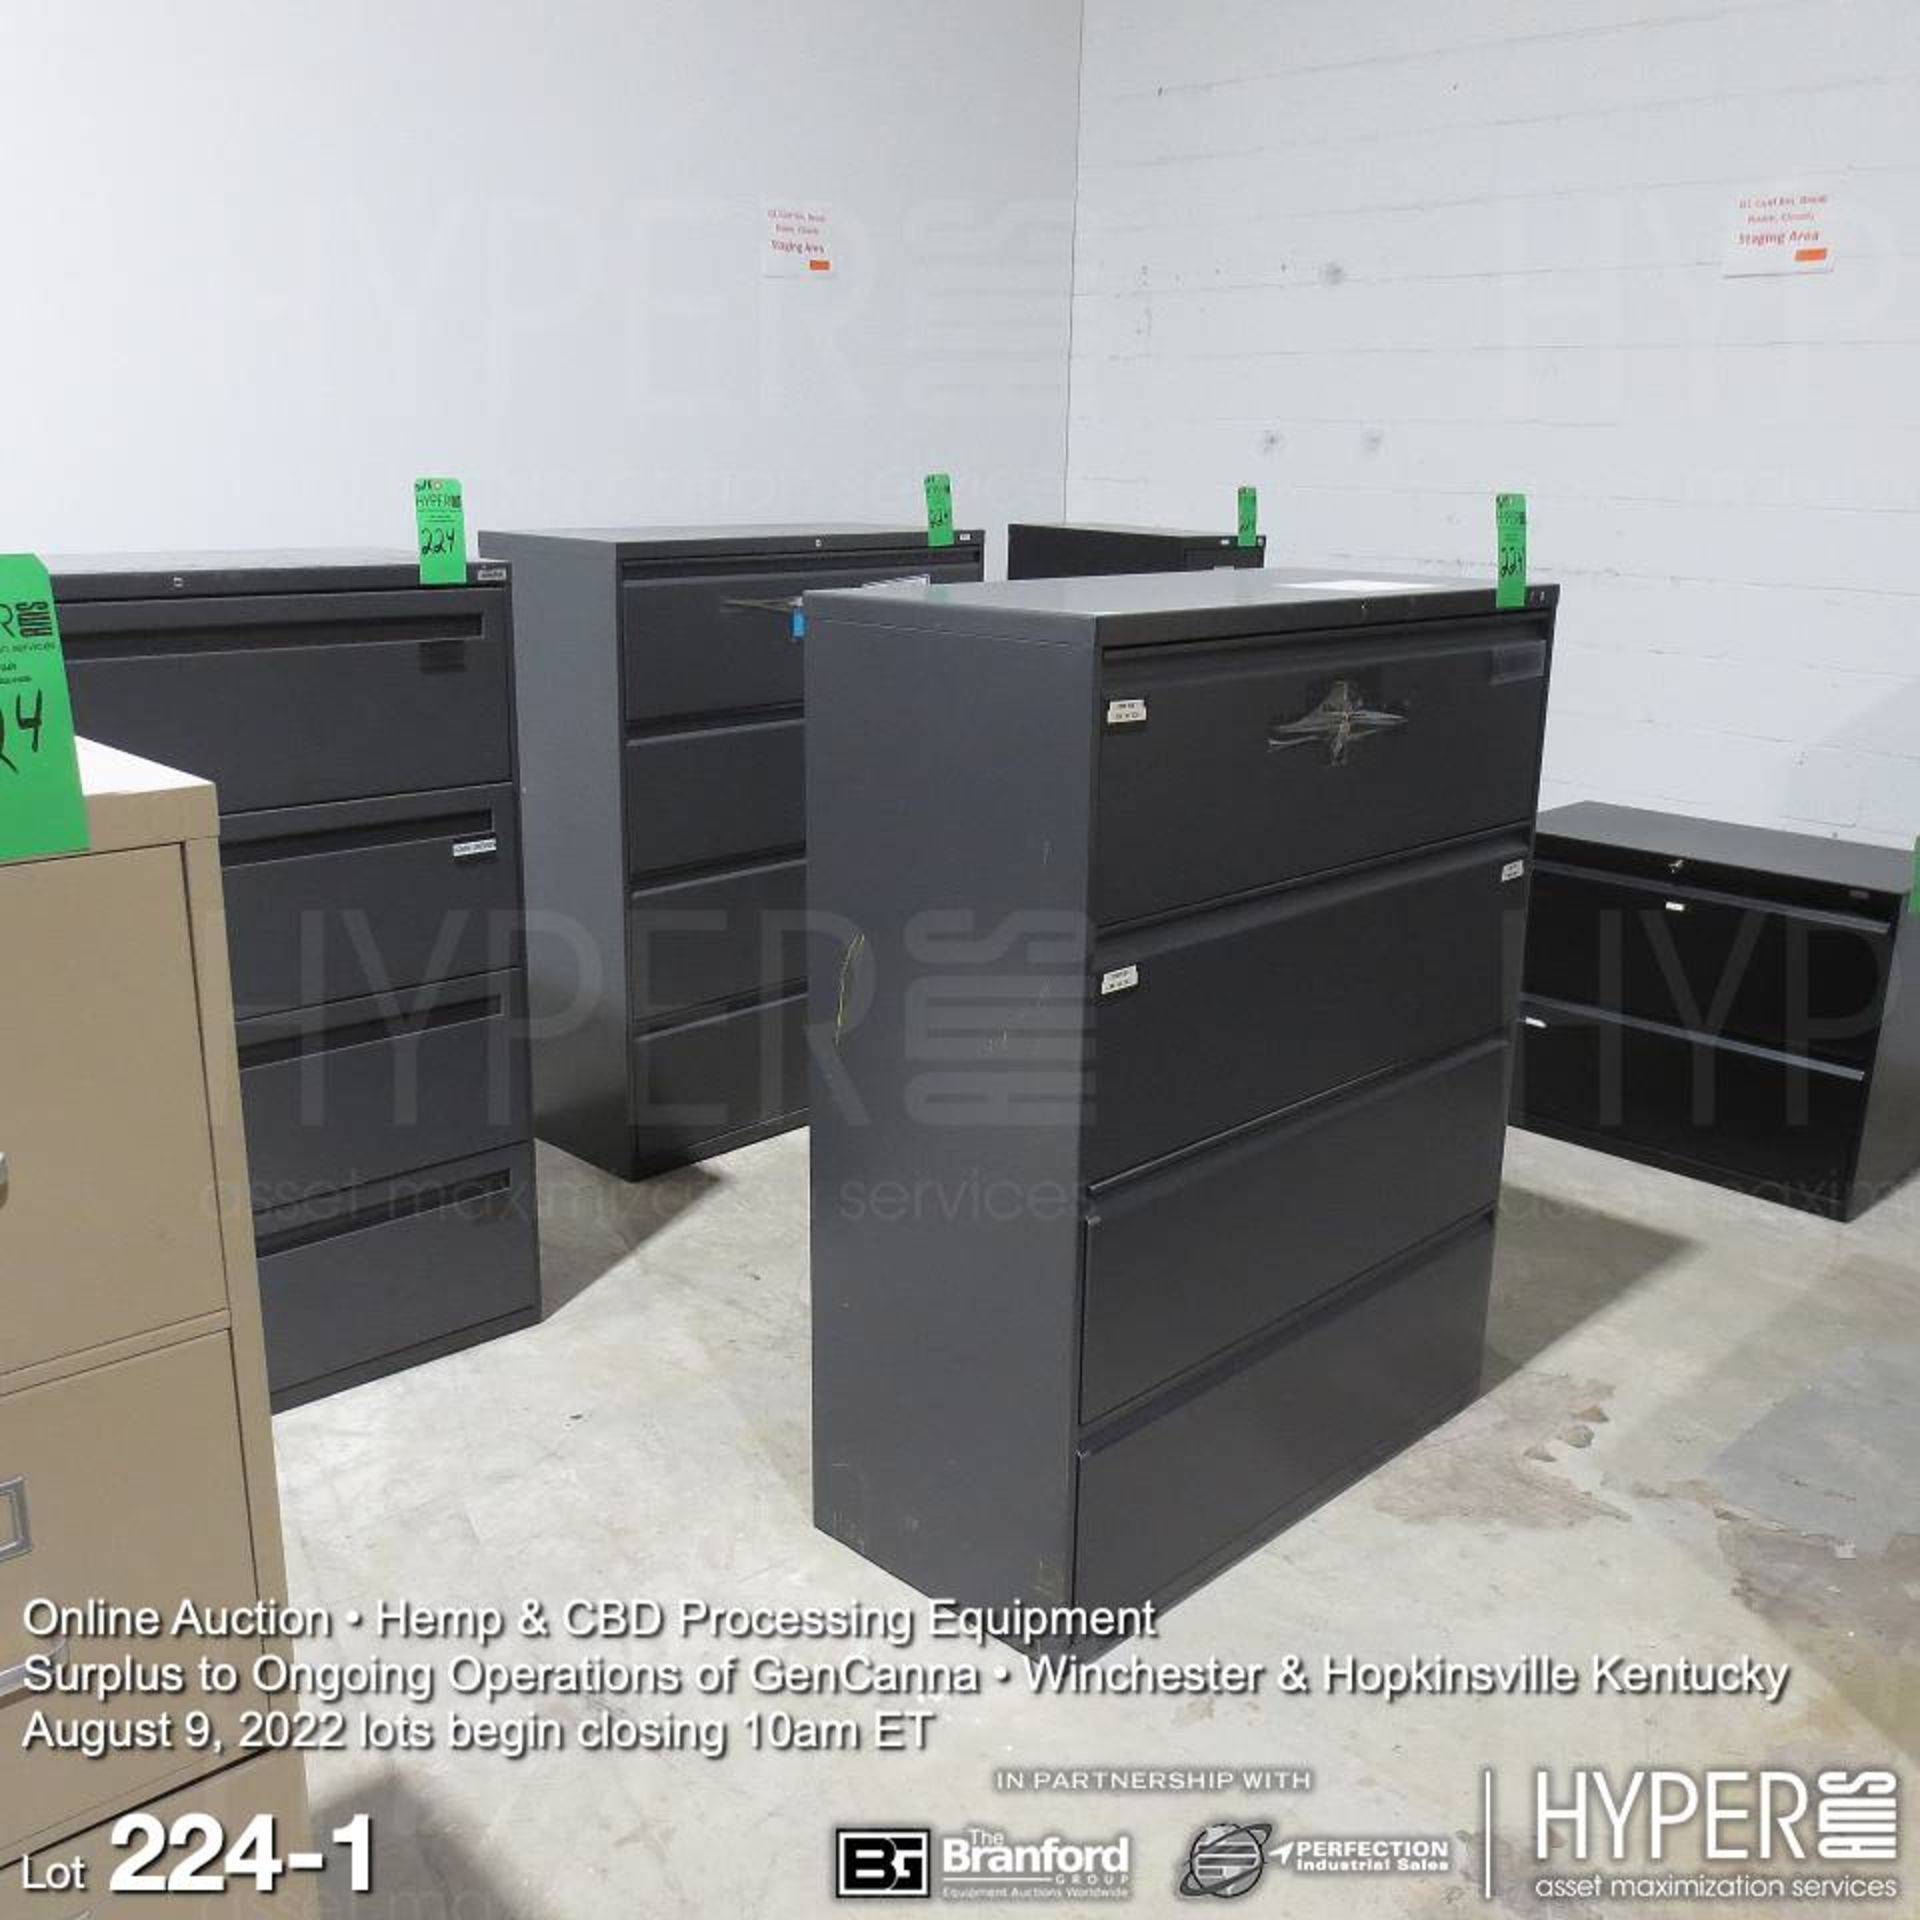 (8) File cabinets